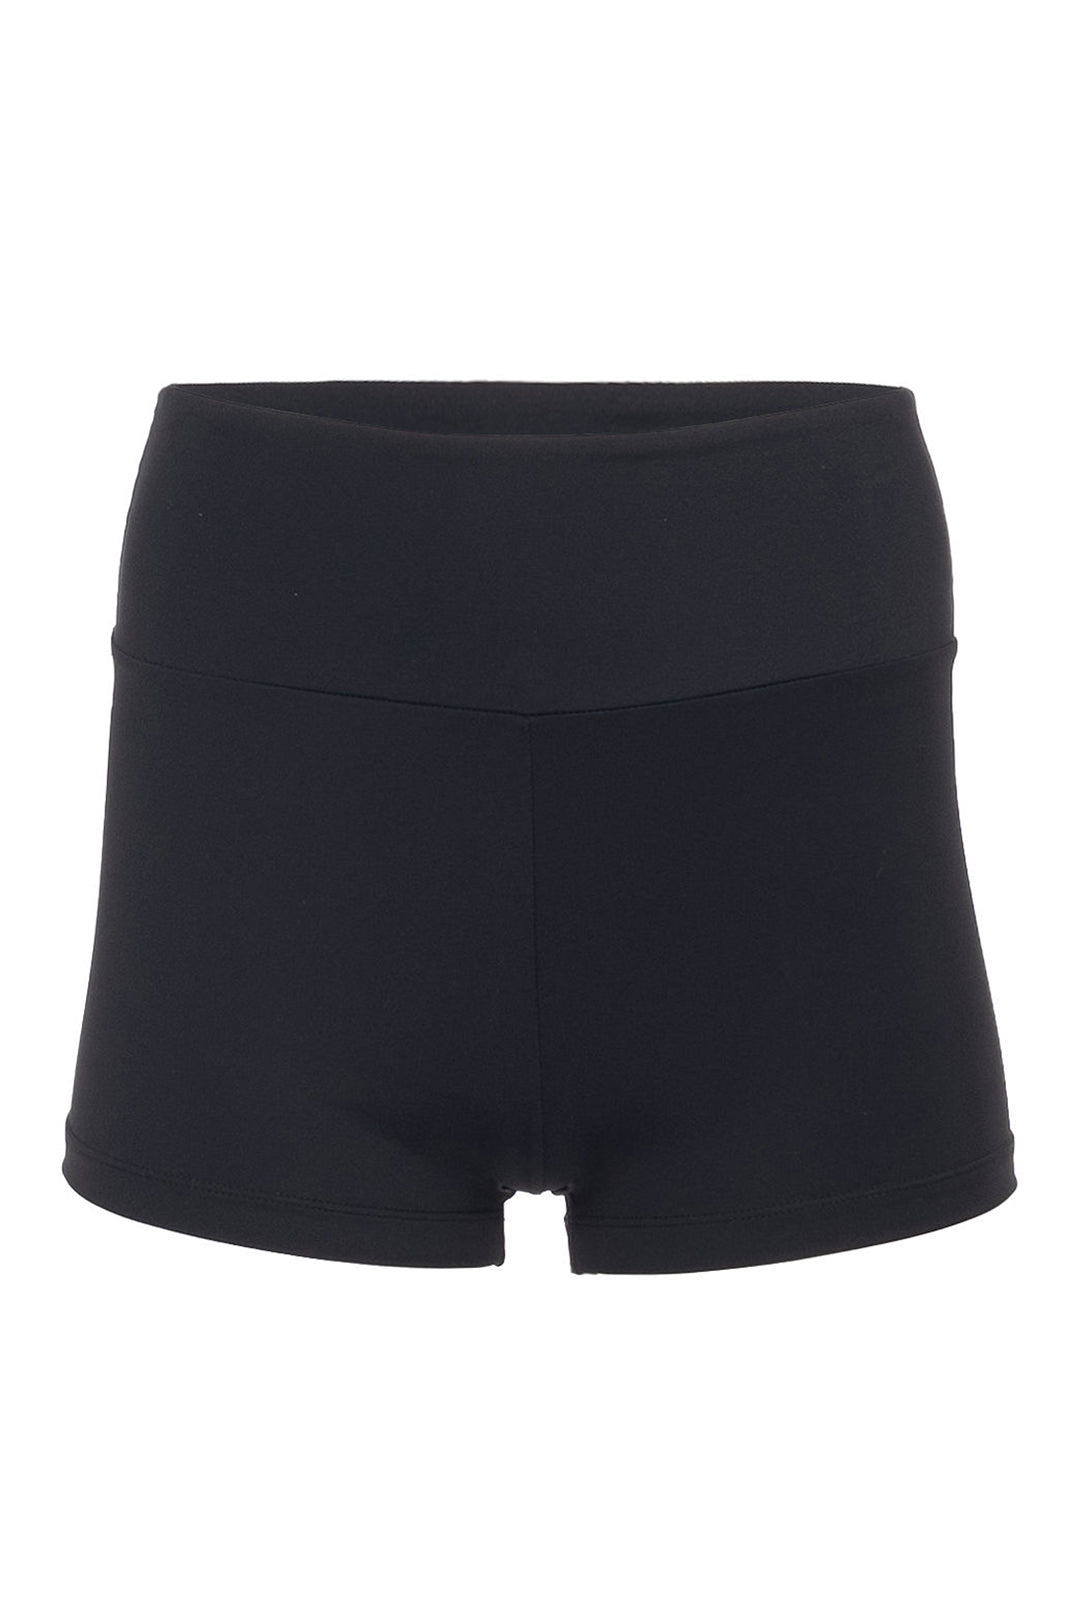 Black bib shorts | Boxer